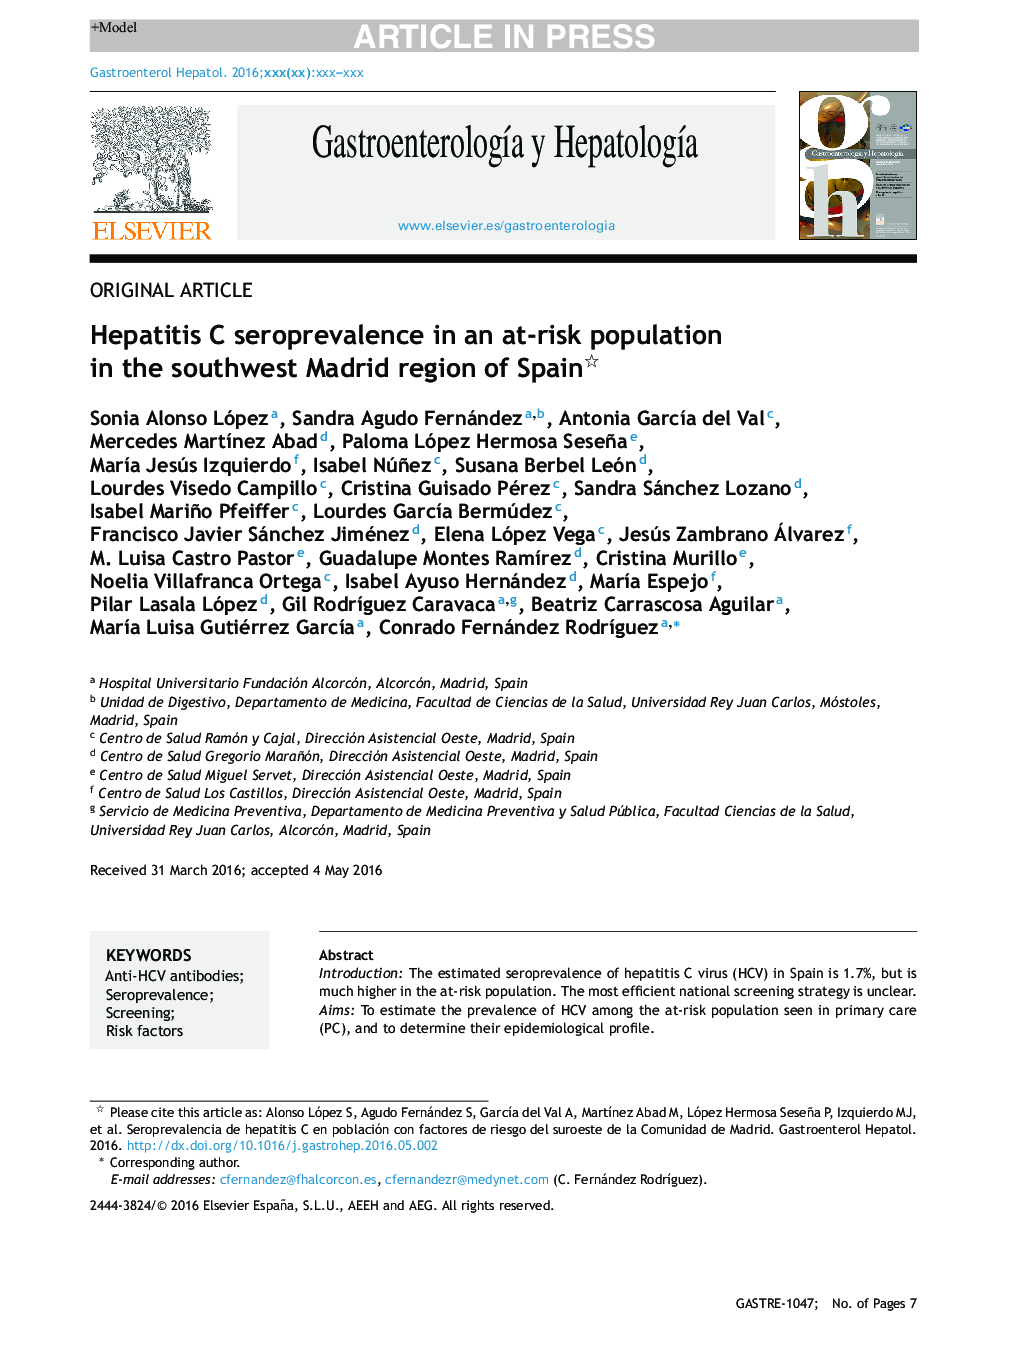 Hepatitis C seroprevalence in an at-risk population in the southwest Madrid region of Spain